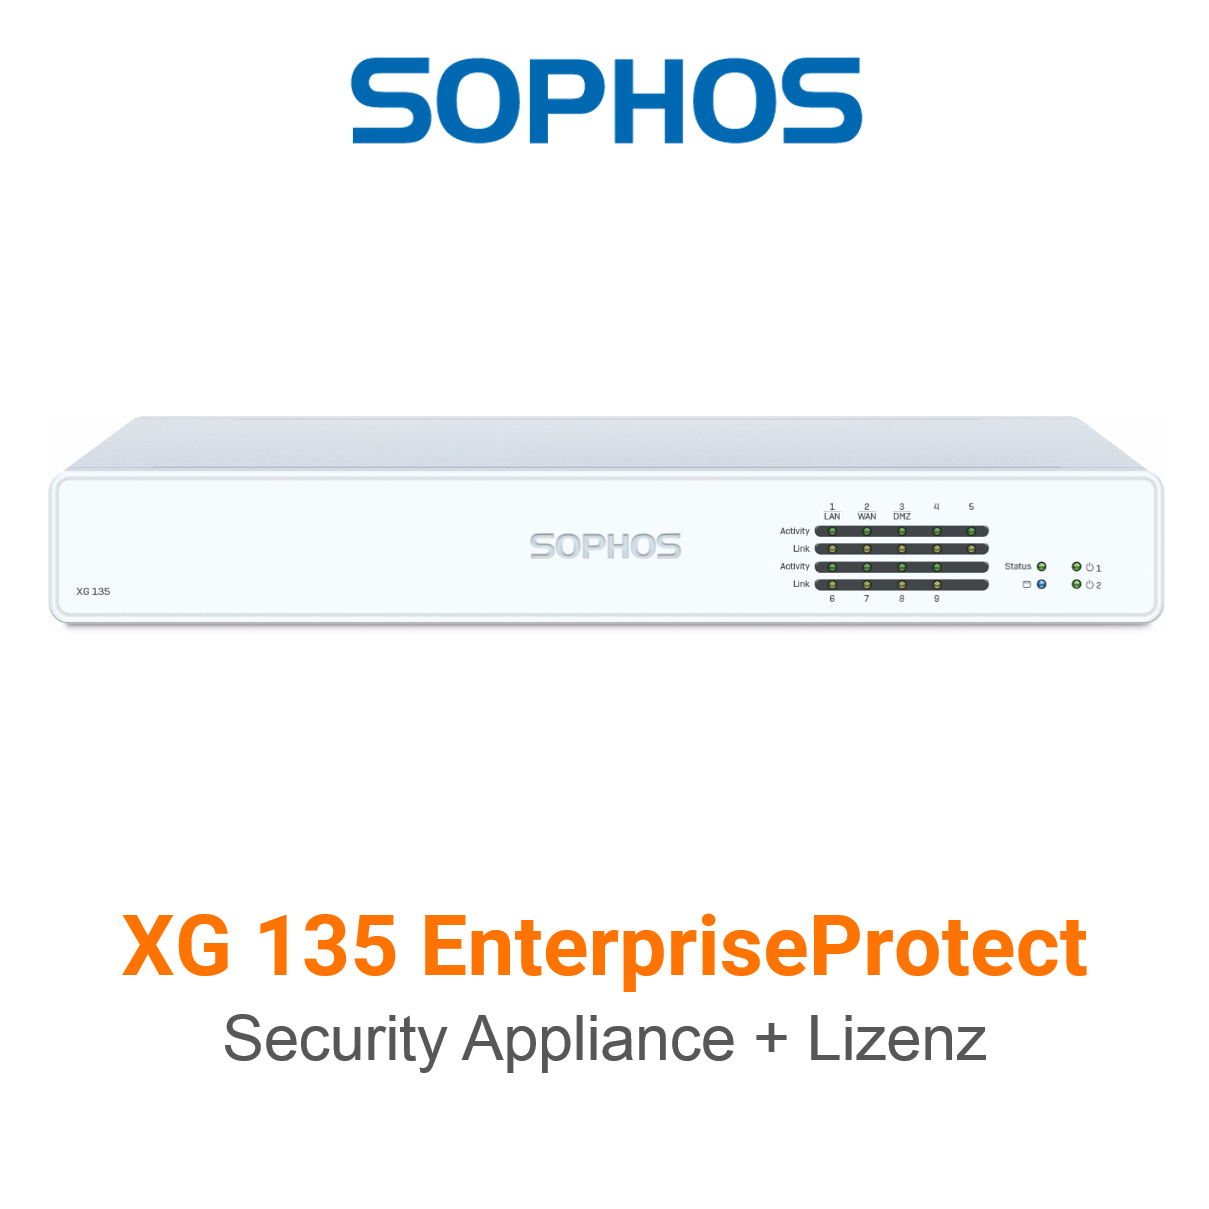 Sophos XG 135 EnterpriseProtect Bundle (Hardware + Lizenz)